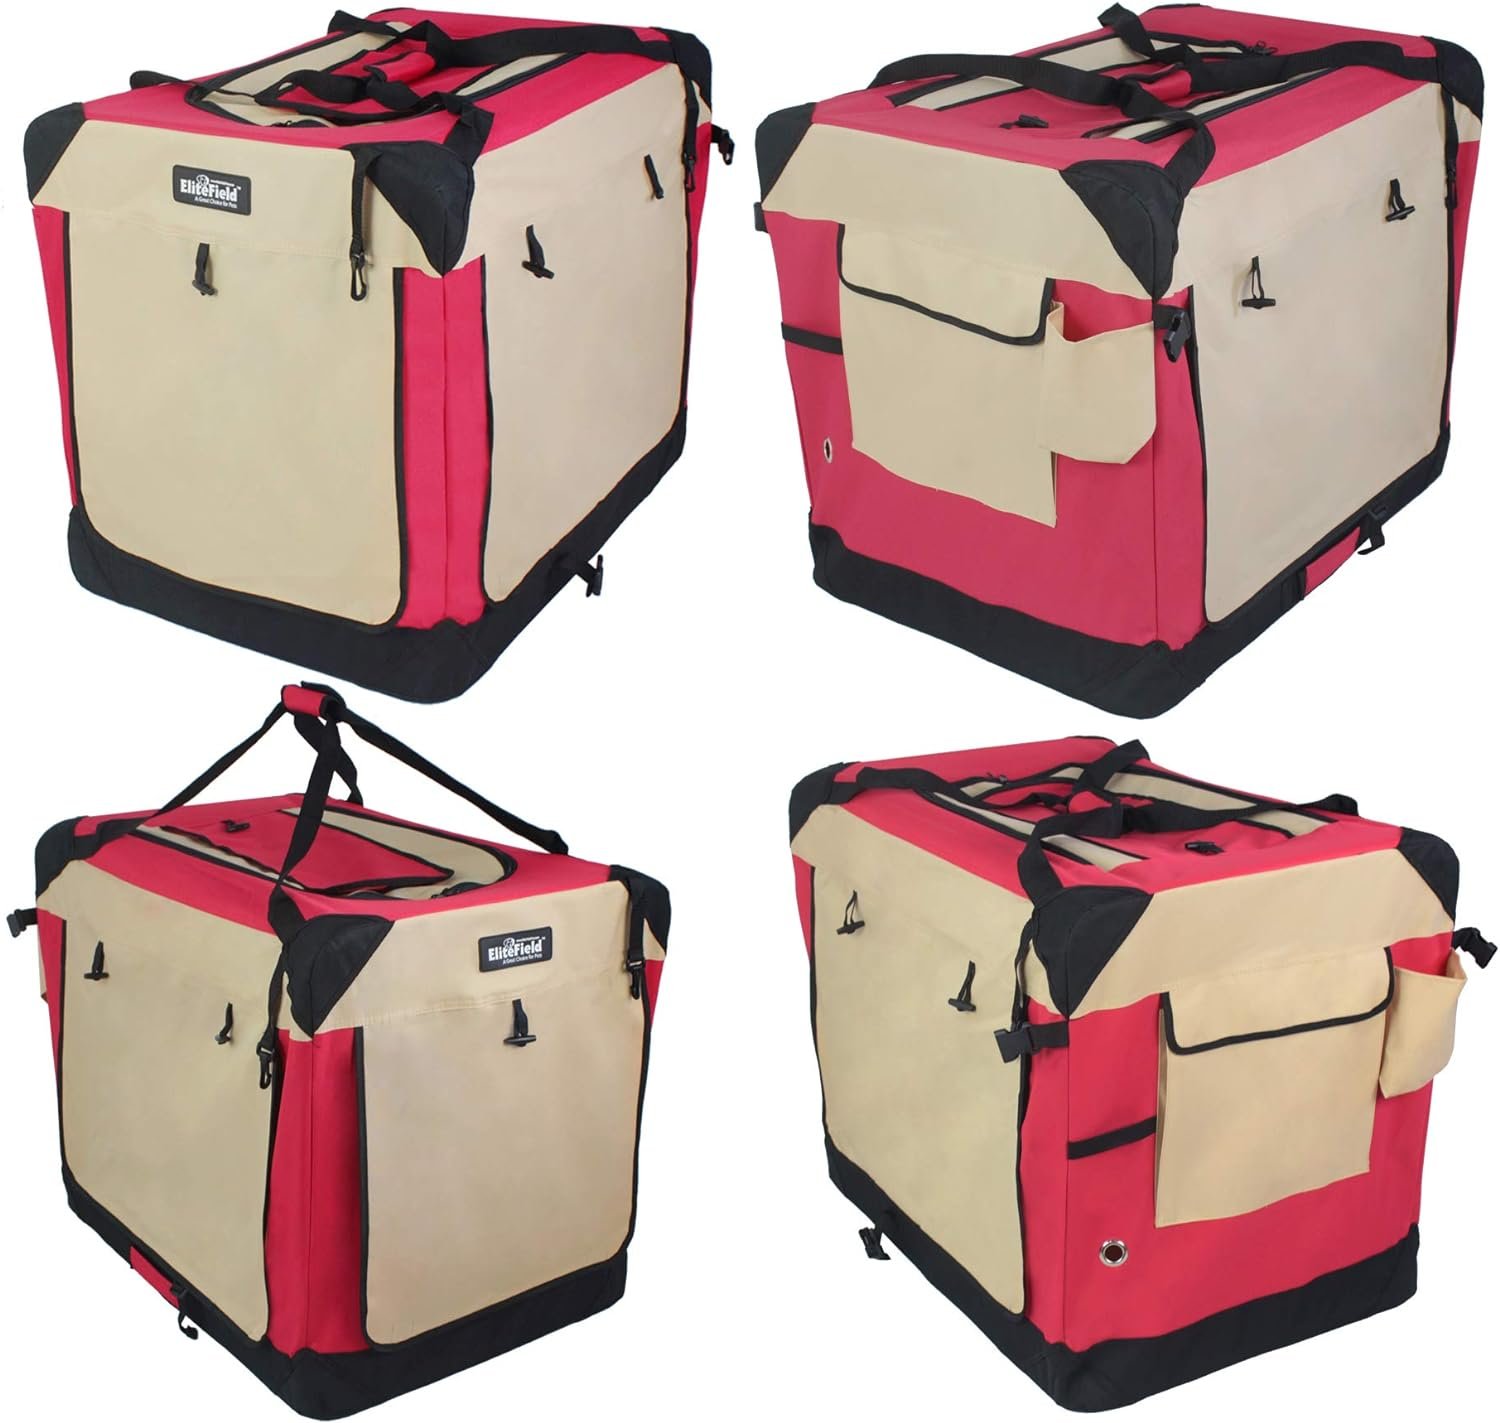 EliteField 3-Door Folding Soft Dog Crate Review